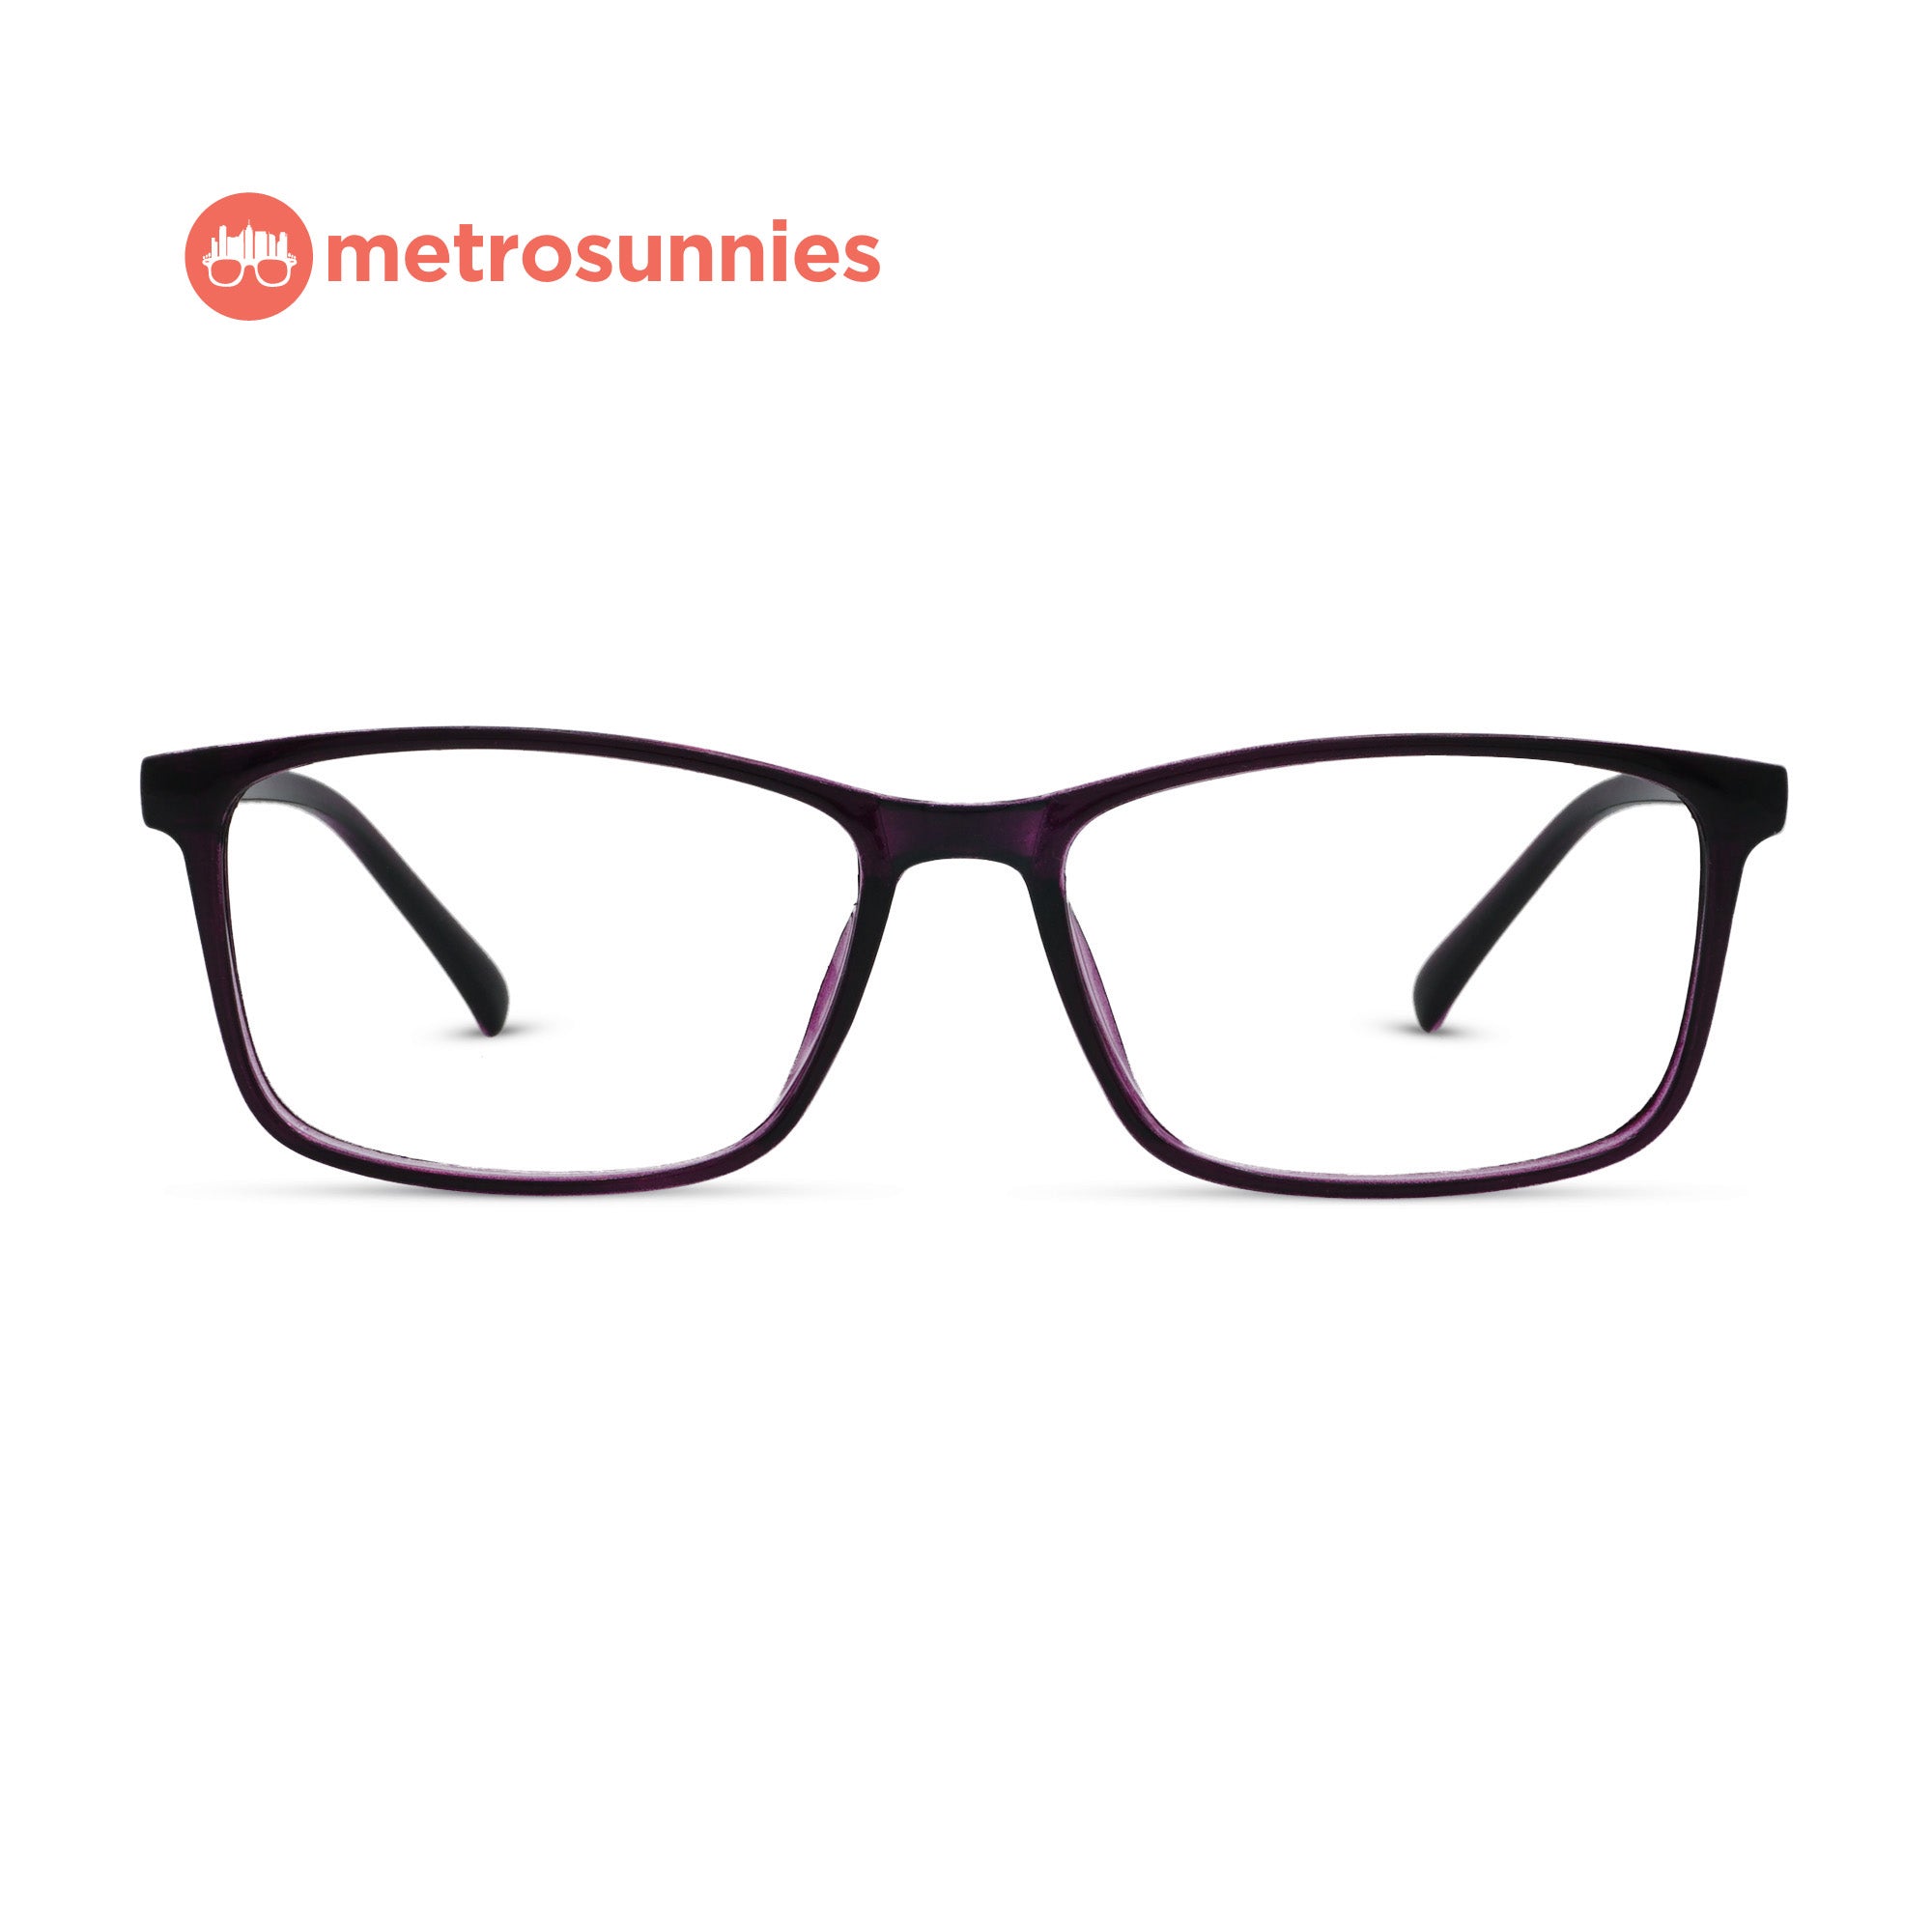 MetroSunnies Penny Specs (Purple) / Replaceable Lens / Eyeglasses for Men and Women